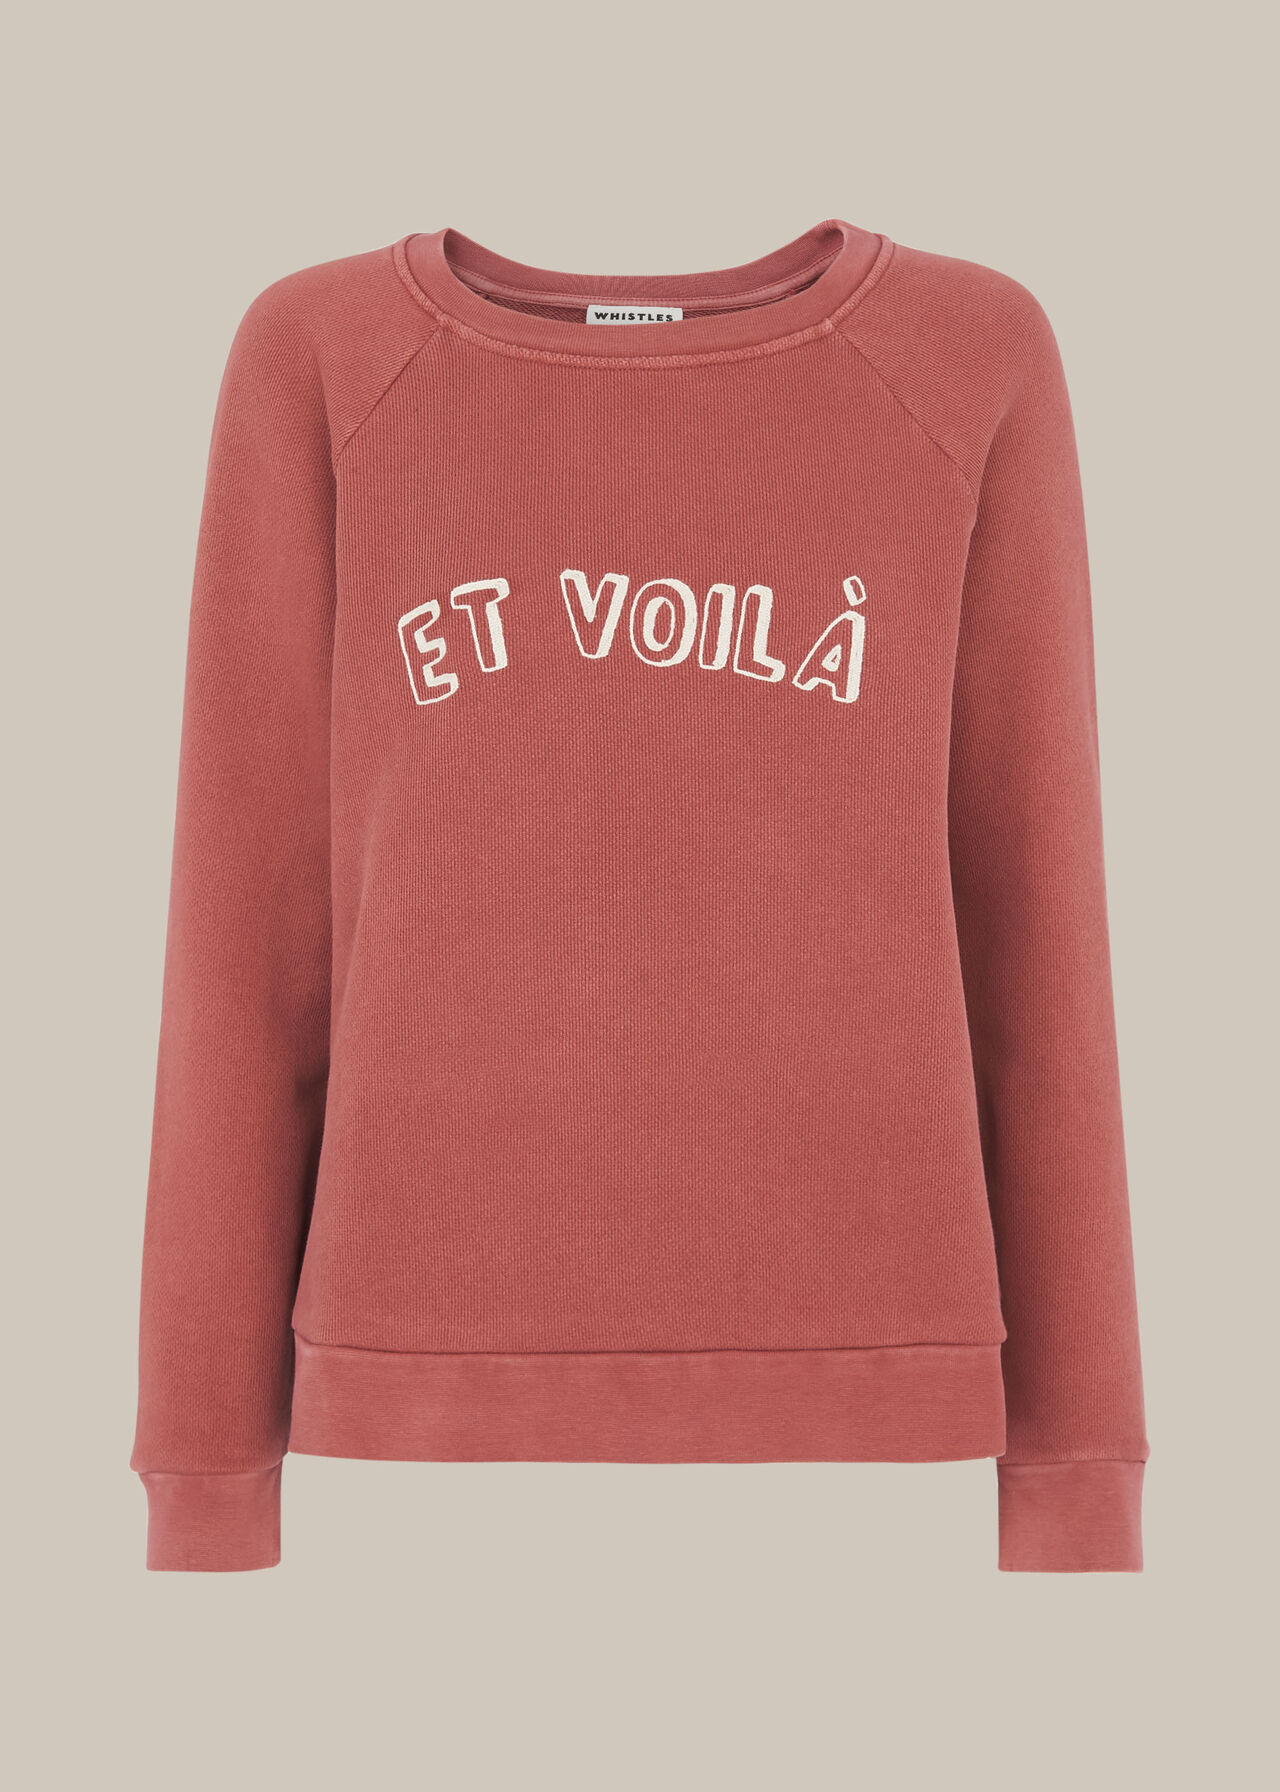 Pale Pink Et Voila Logo Sweatshirt | WHISTLES